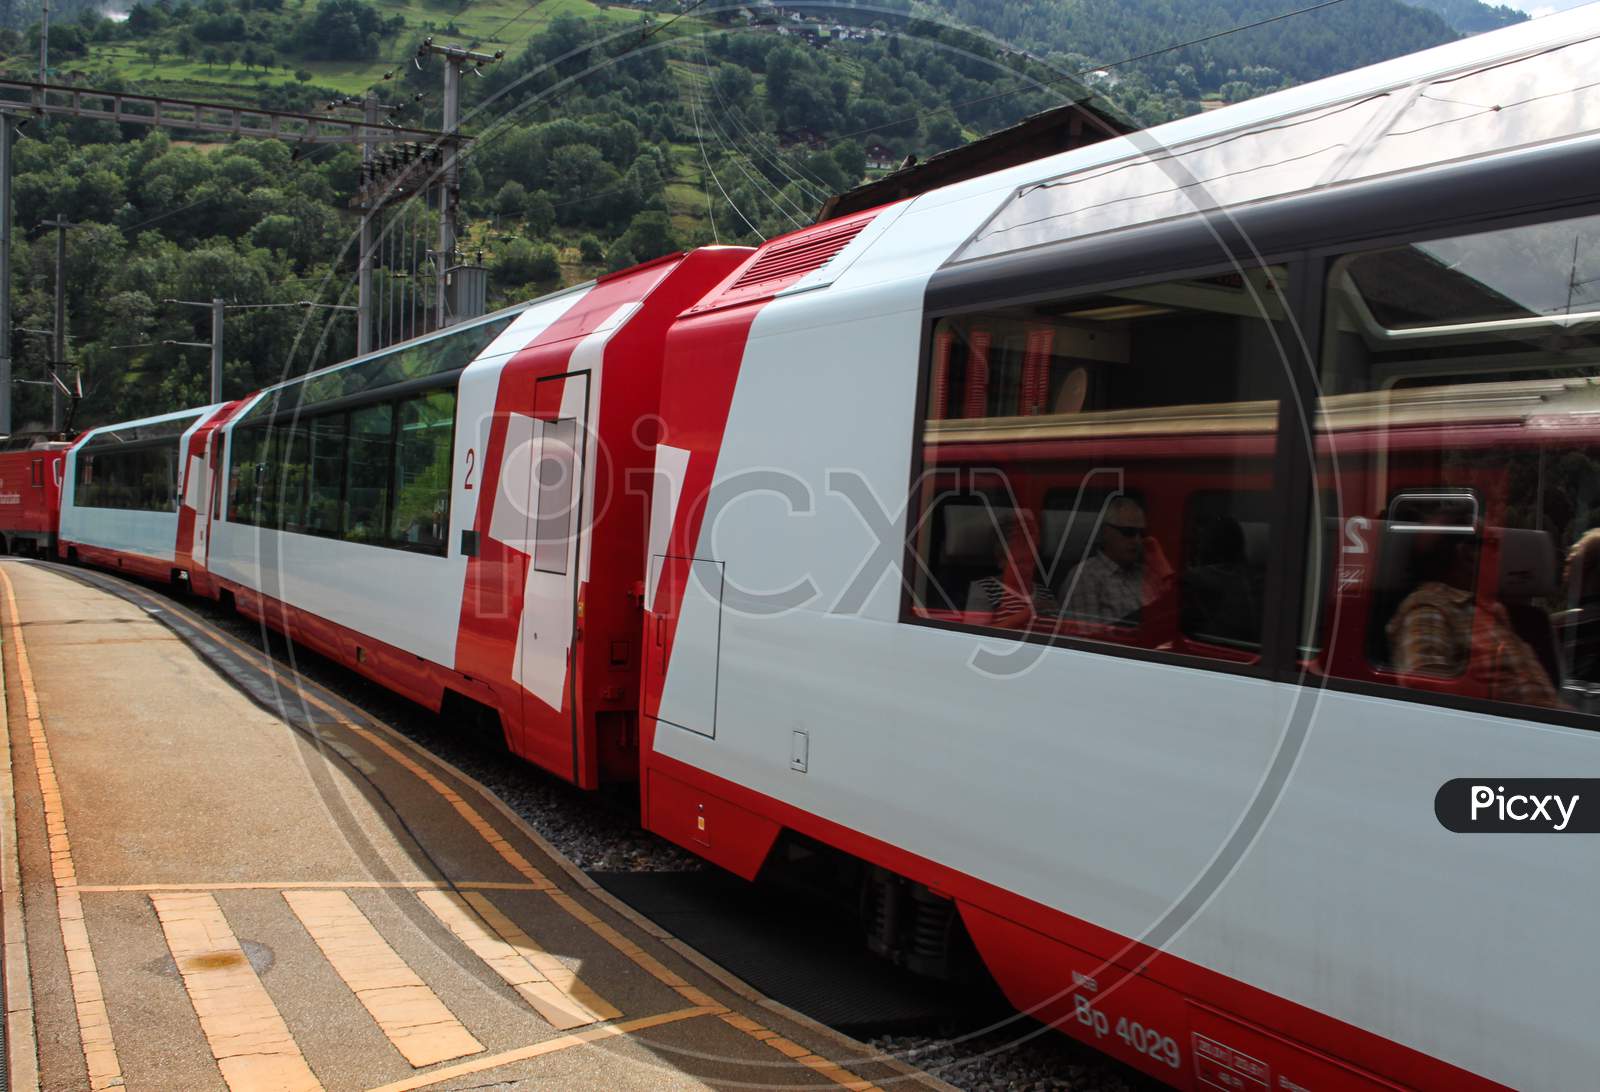 Glacier Express scenic train is the famous scenic train link between St-Moritz and Zermatt